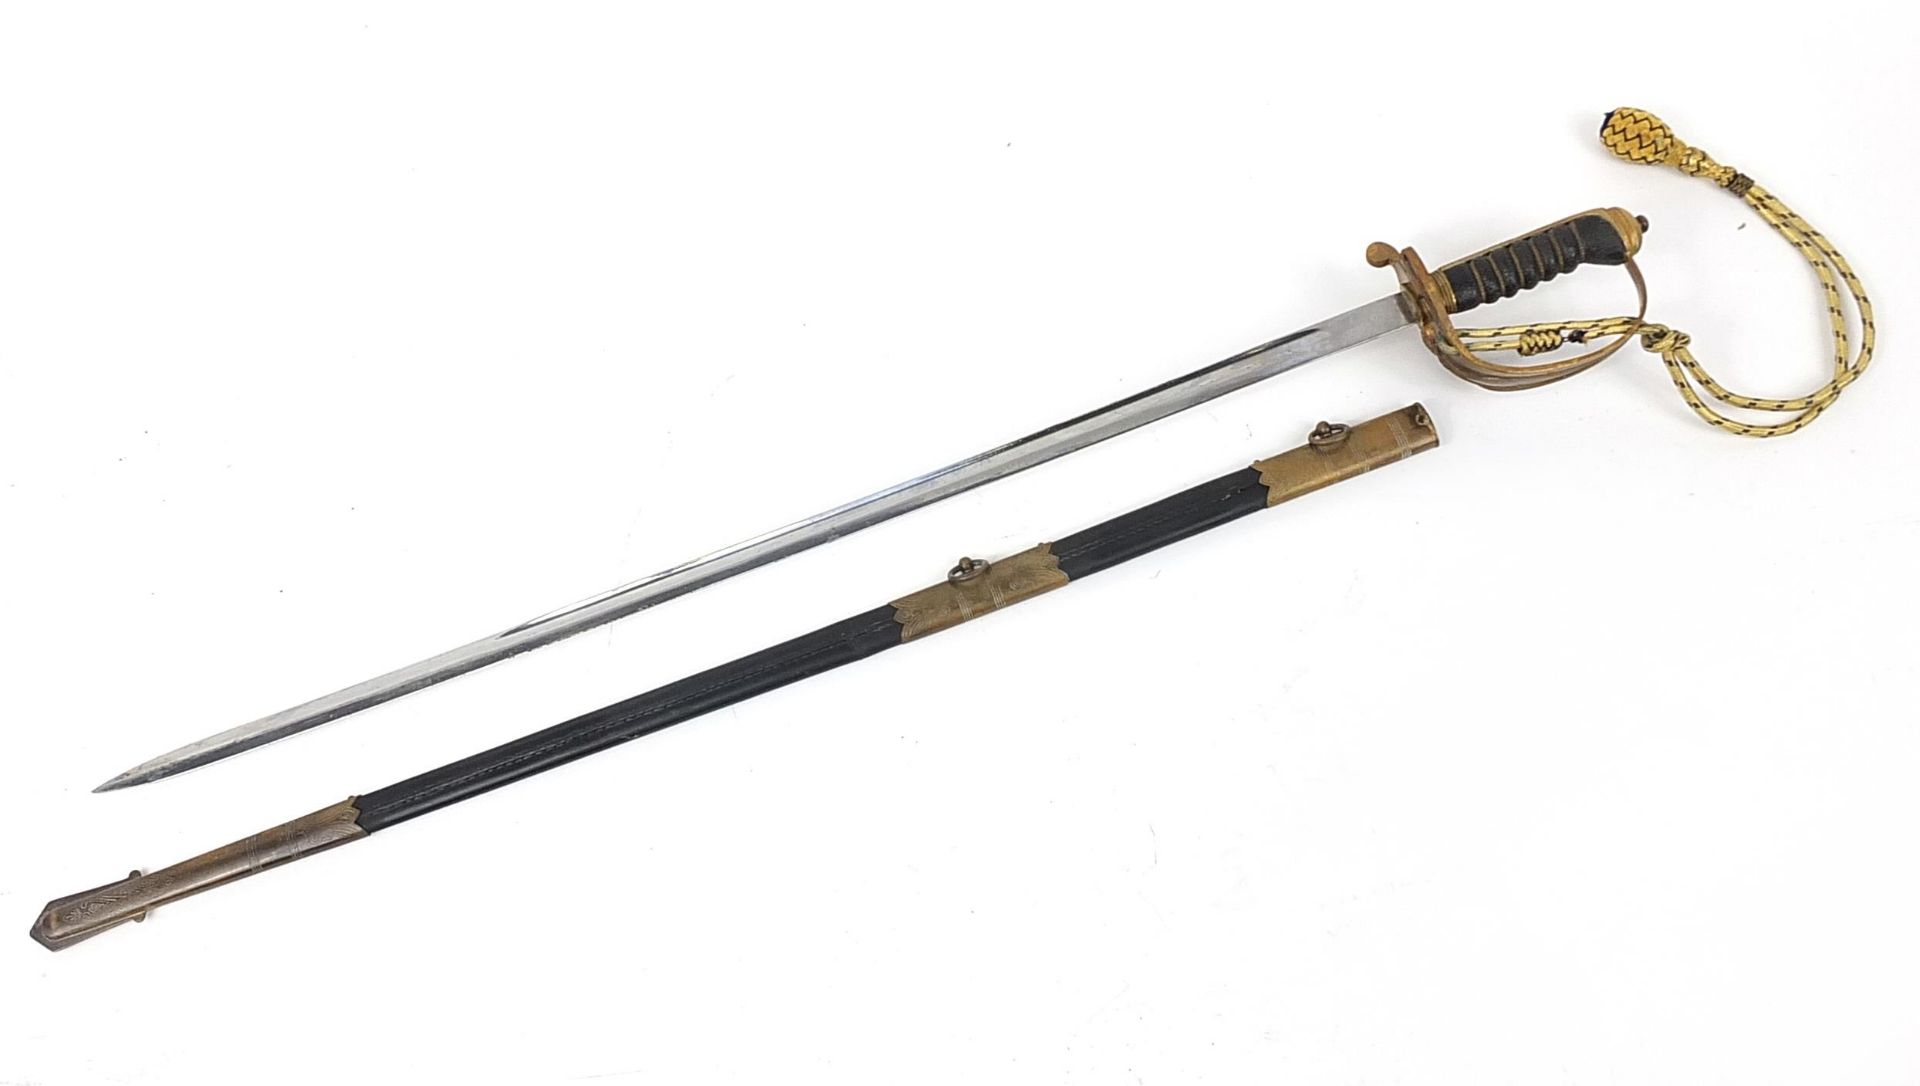 Elizabeth II naval interest dress sword with scabbard by Wilkinson, 96cm in length - Image 2 of 4